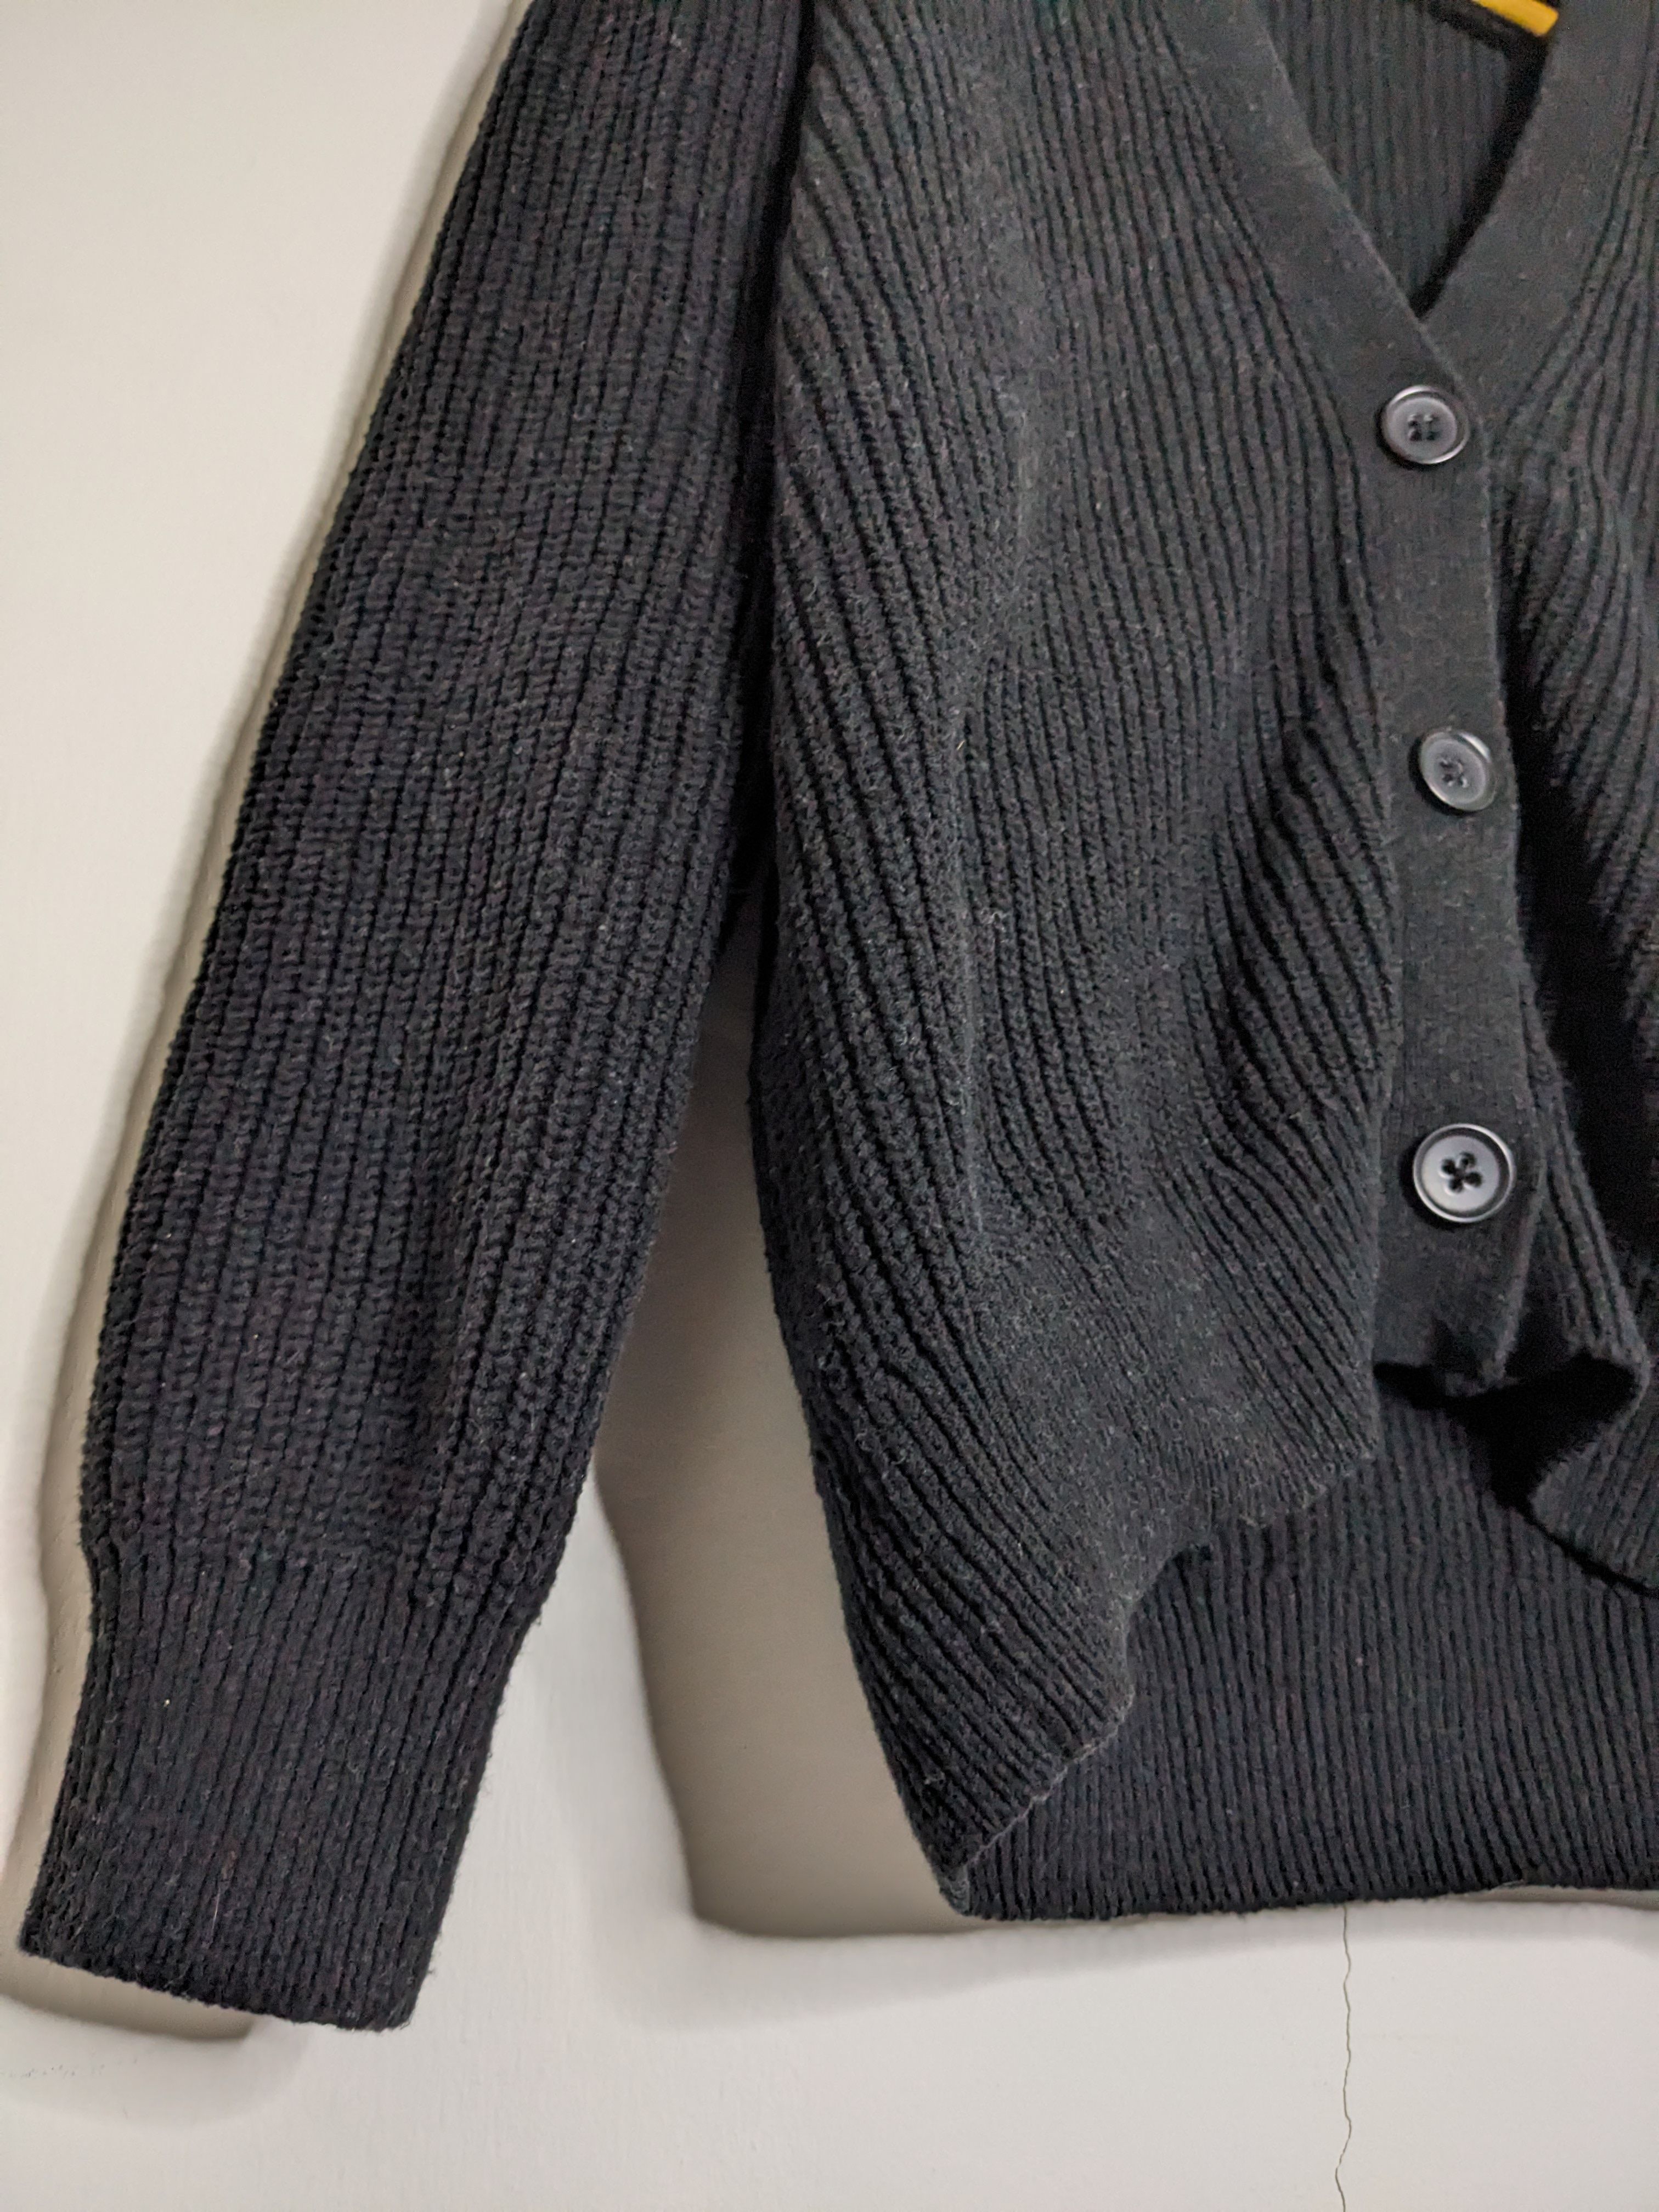 Uniqlo Crocheted Pattern Cotton Knit Sweater Black Cardigan - 4